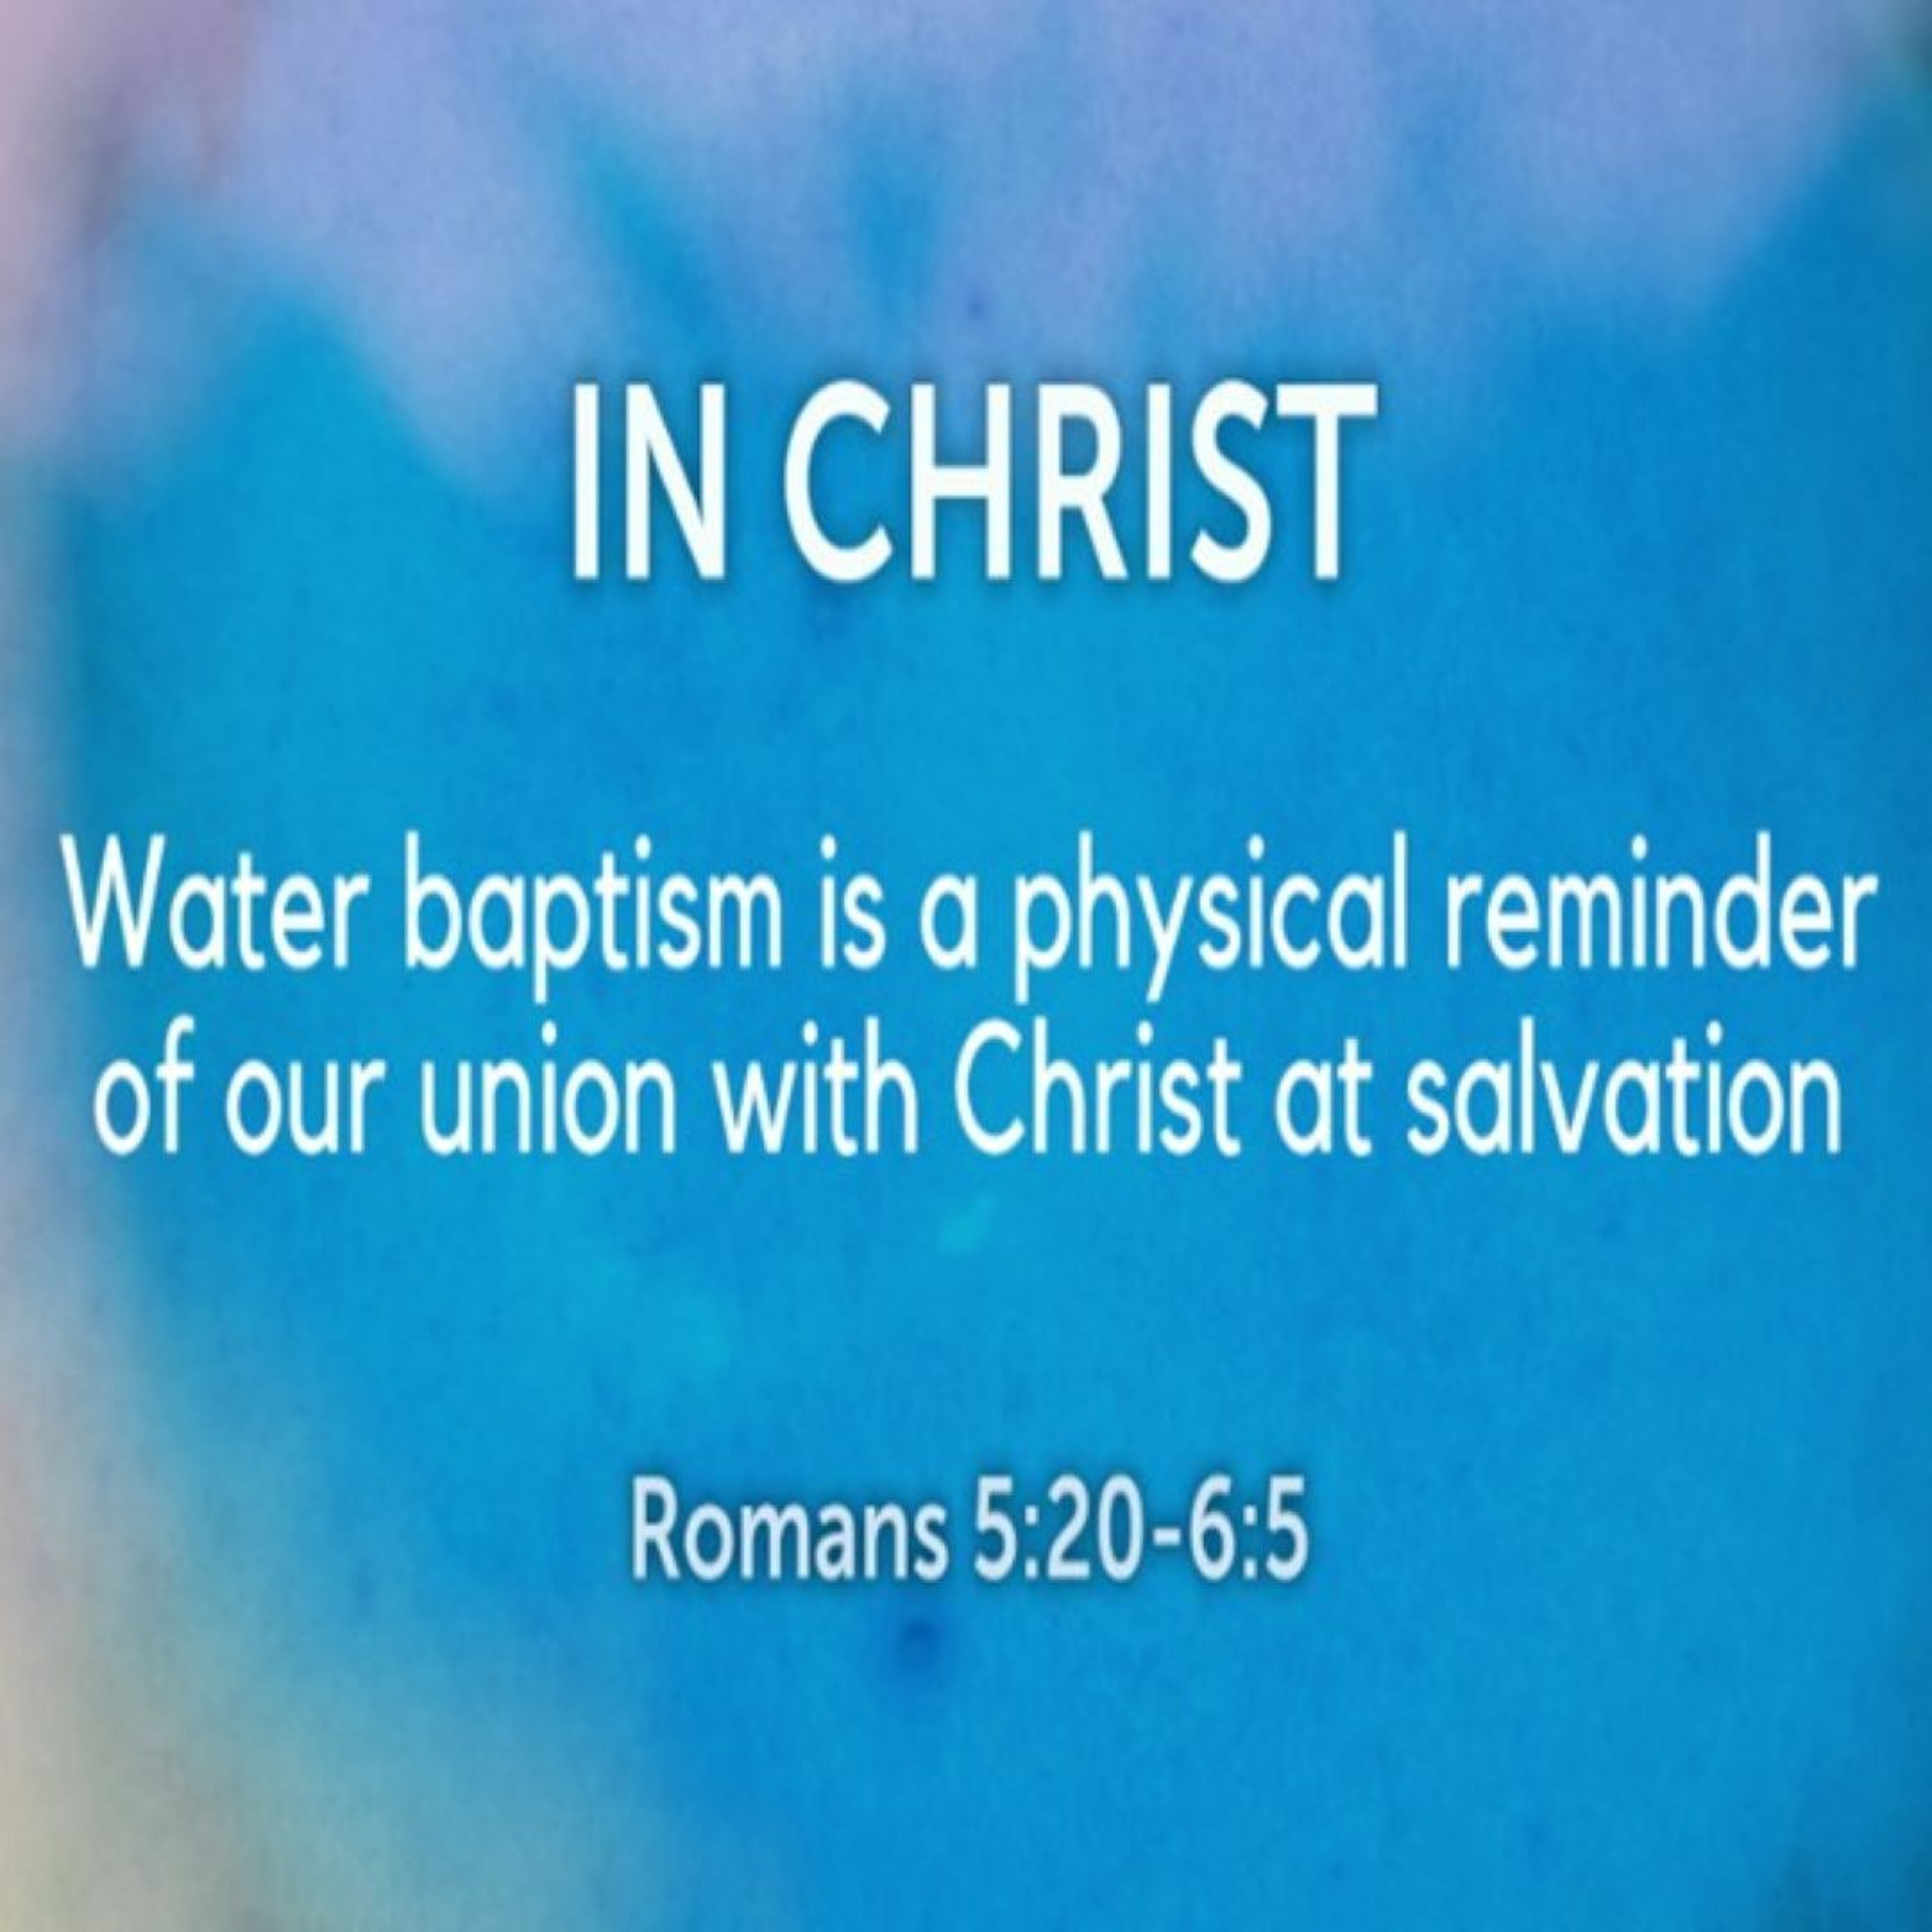 In Christ (Romans 5:20-6:5)